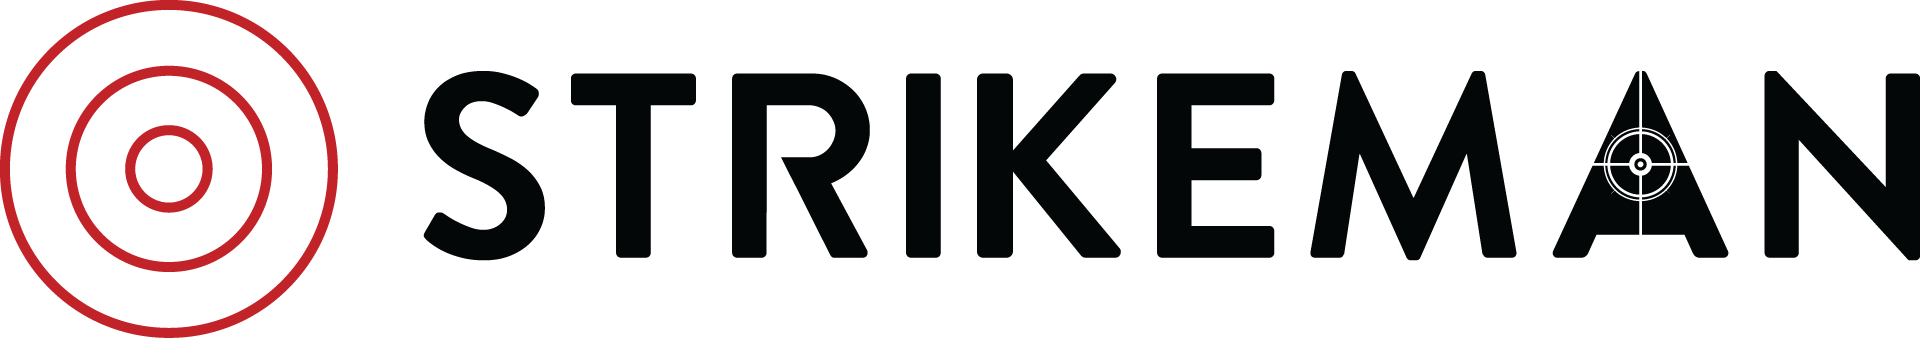 Strikeman logo